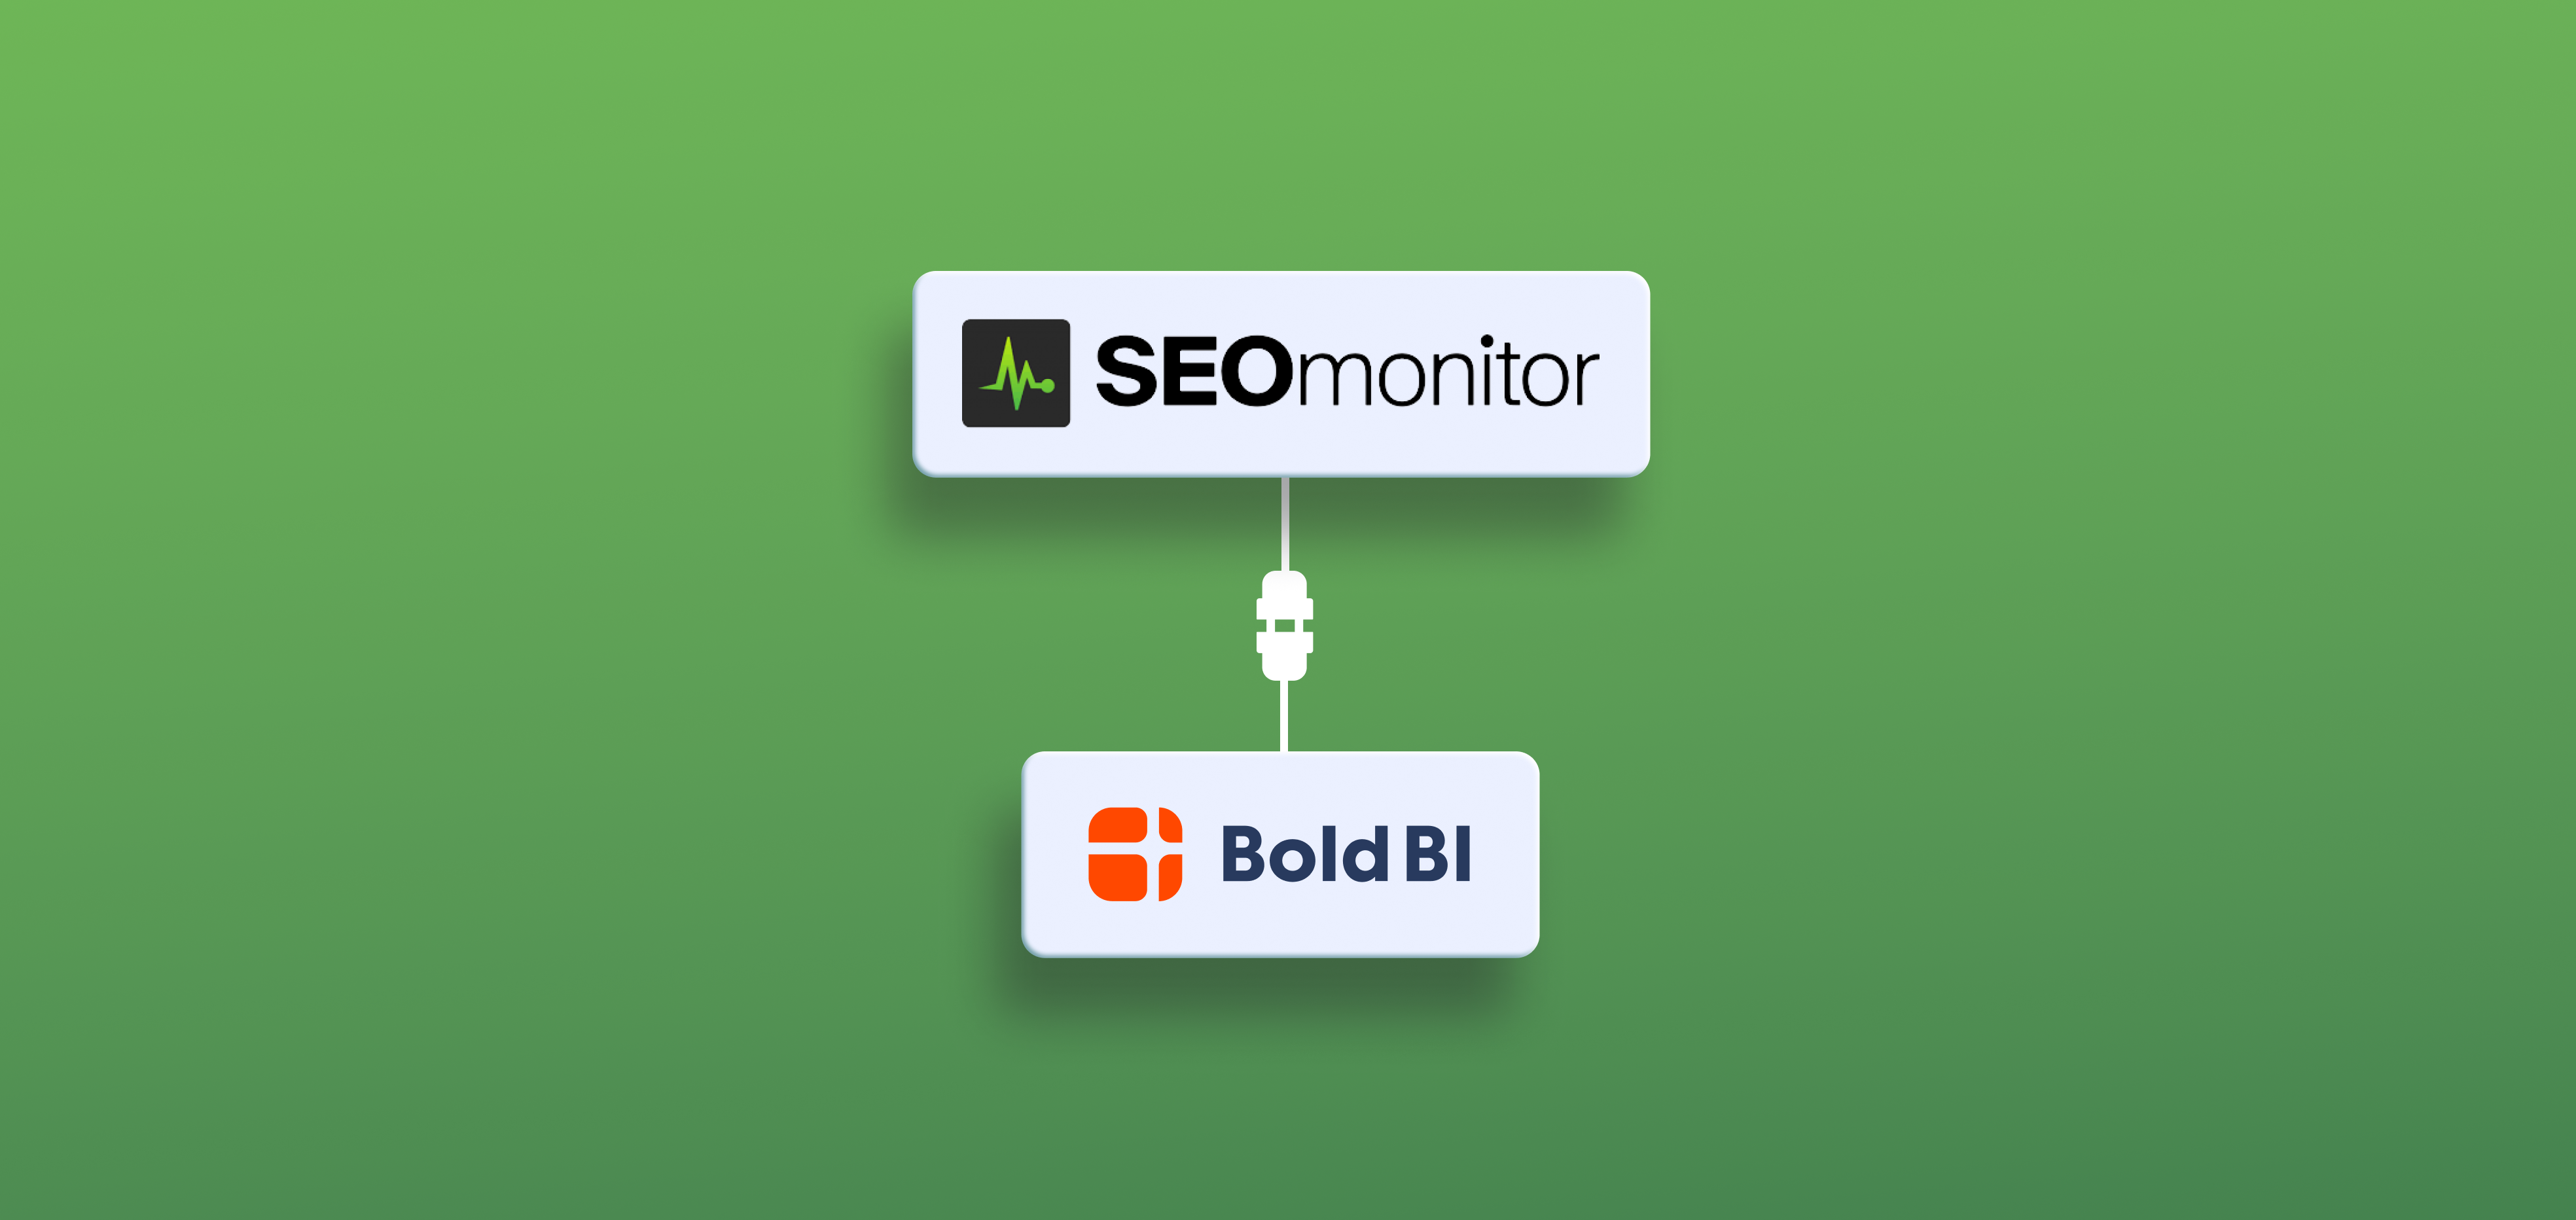 Connecting Bold BI to SEOmonitor data source